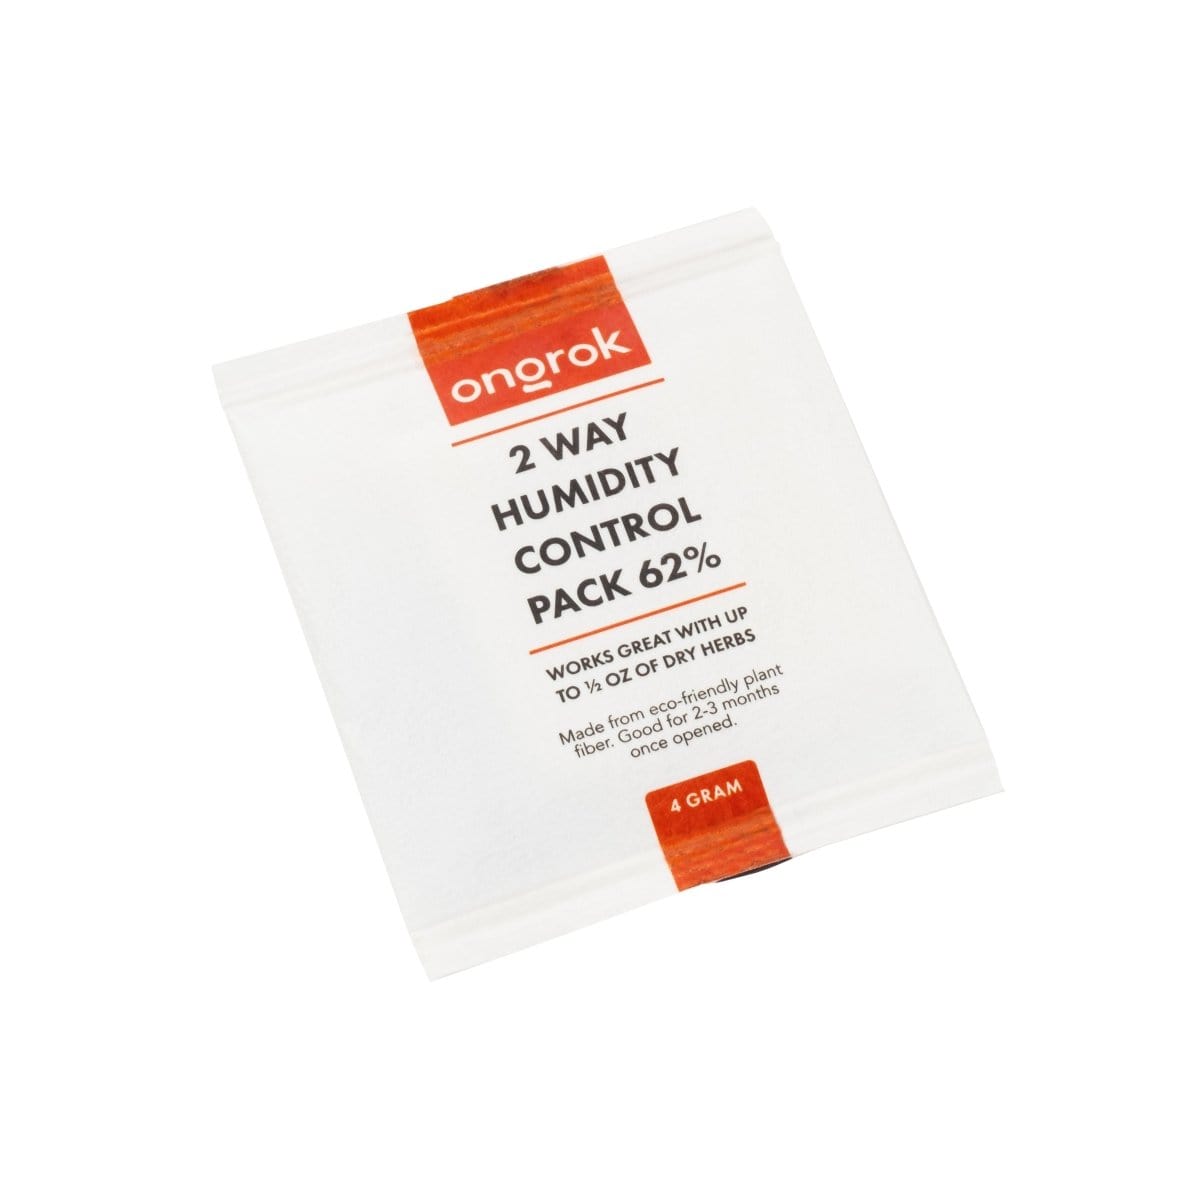 ONGROK 2-Way 62% Humidity Packs | 3 sizes (Small, Medium, Large)